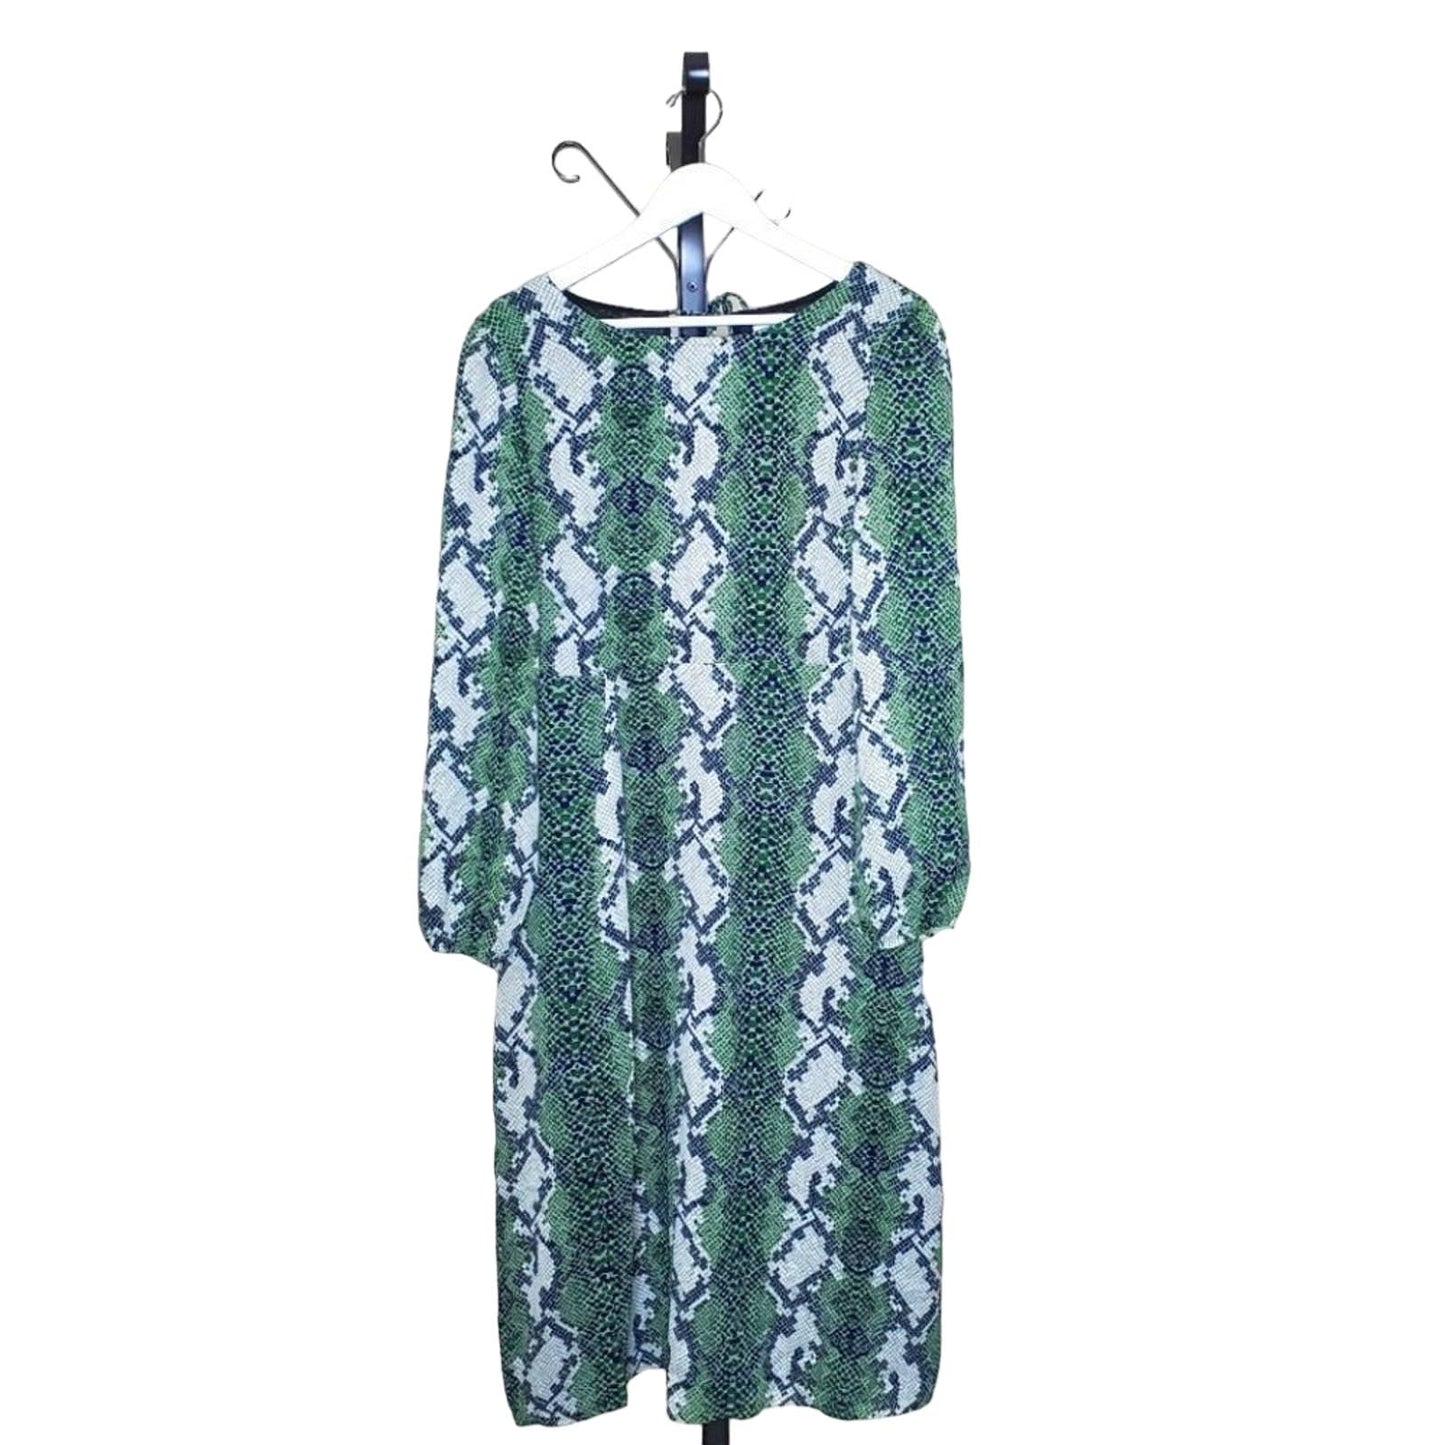 Glamorous Long Sleeve Midi Shift Dress with Green Snake Print, Medium